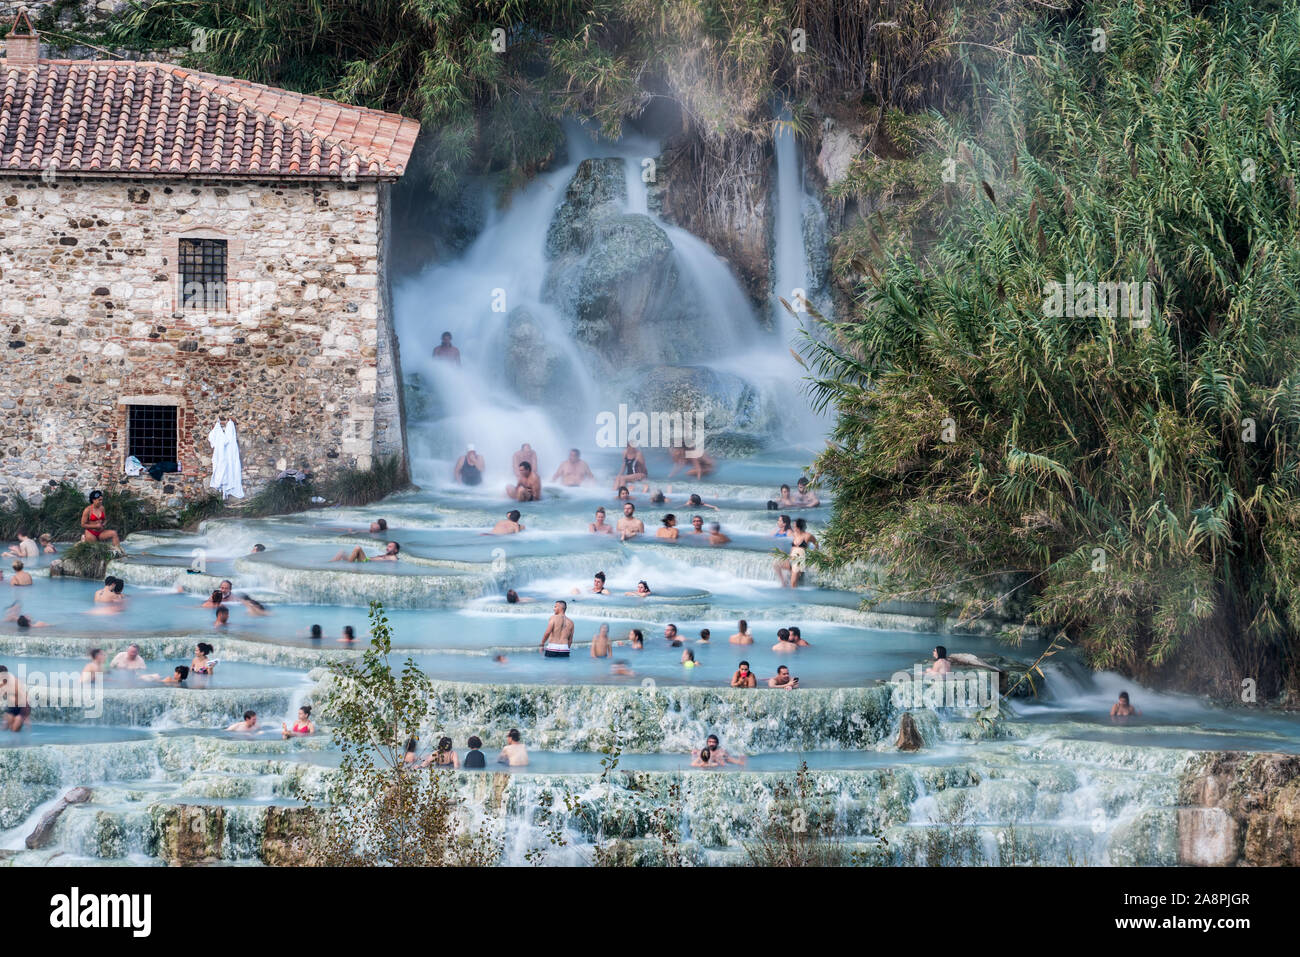 Balneario Natural con cascadas y fuentes termales de termas de Grosseto, Toscana, Italia de stock -